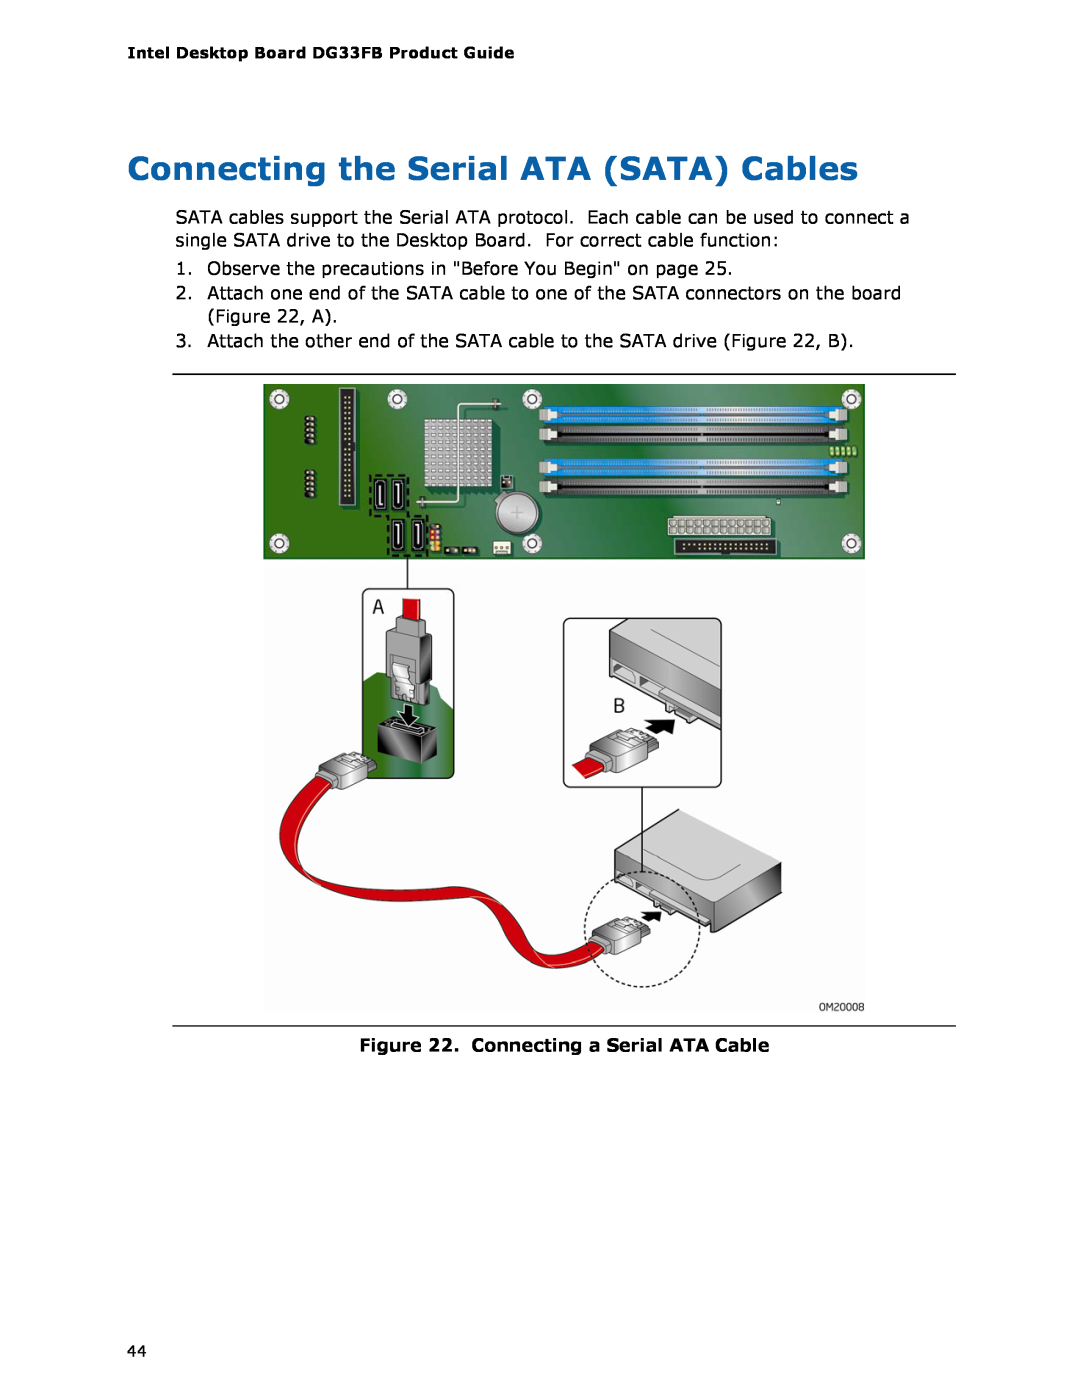 Intel DG33FB manual Connecting the Serial ATA SATA Cables, Connecting a Serial ATA Cable 